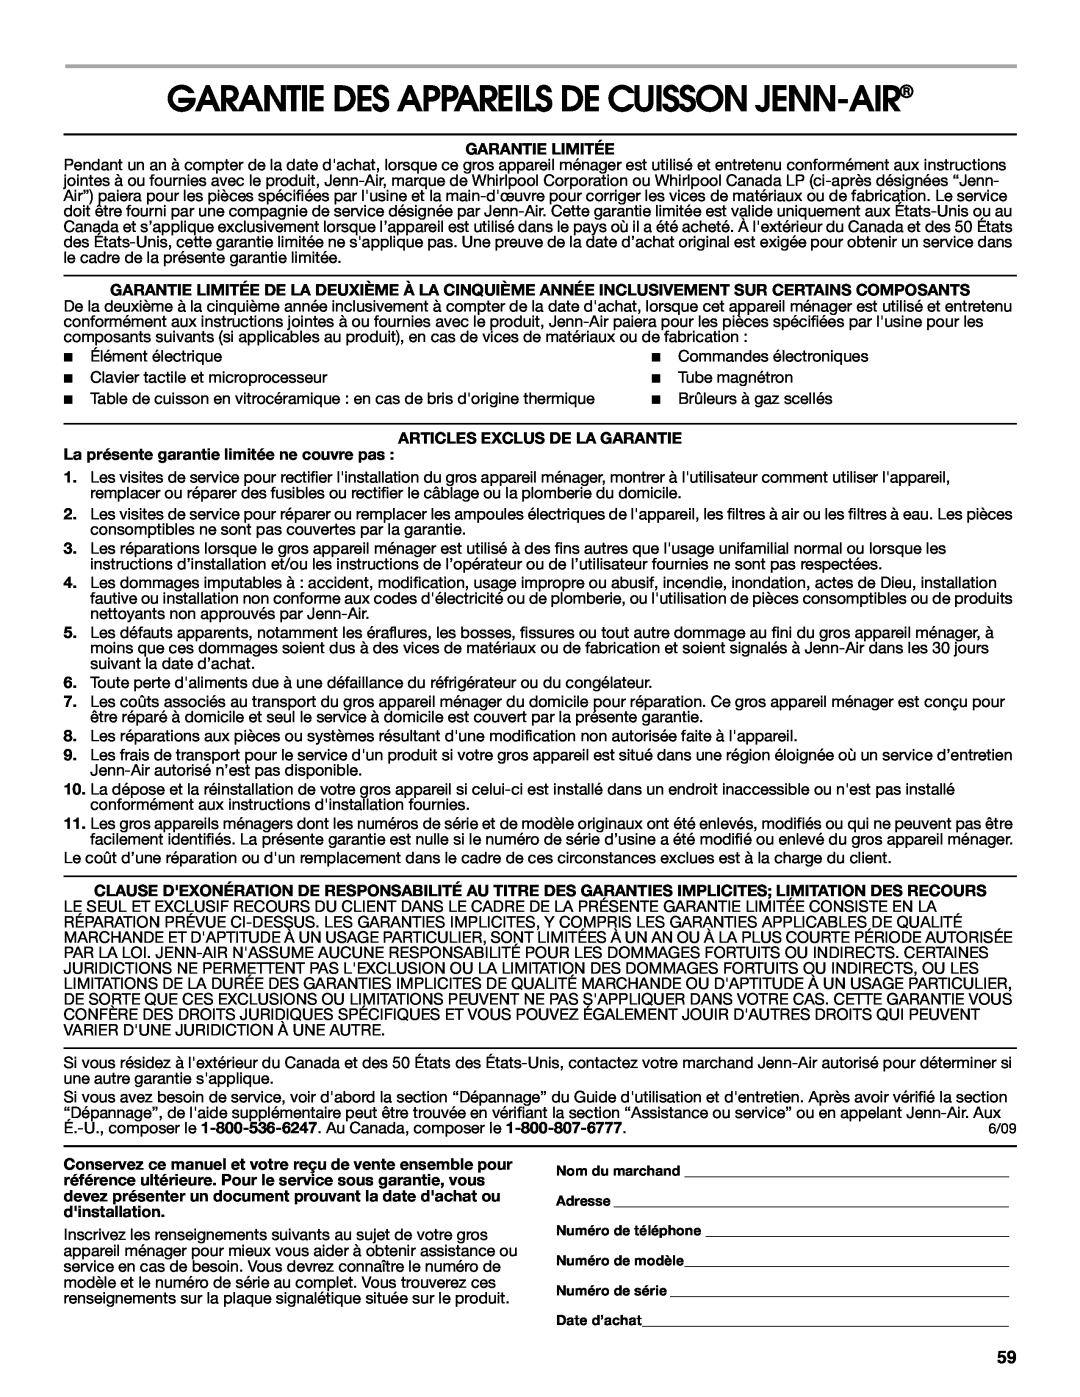 Jenn-Air JDS8850, JDS8860 Garantie Des Appareils De Cuisson Jenn-Air, Garantie Limitée, Articles Exclus De La Garantie 